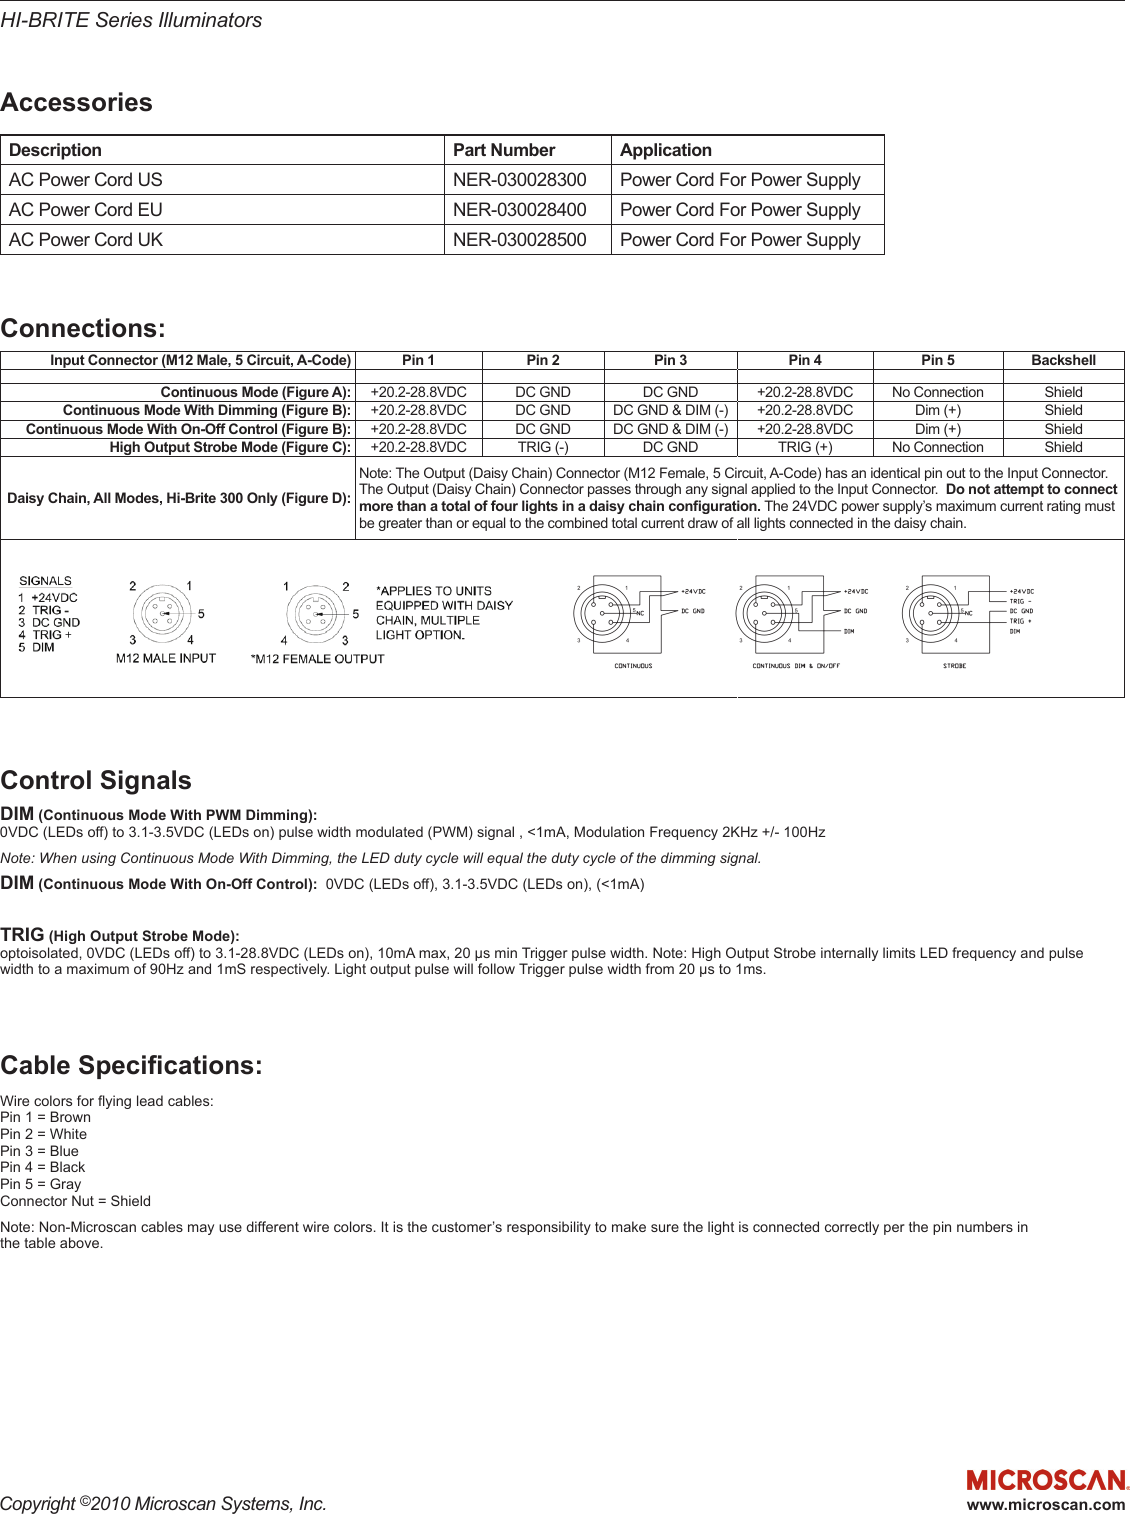 Page 2 of 2 - HI-BRITE Series Illuminator Configuration Guide  Hibriteconfigguide